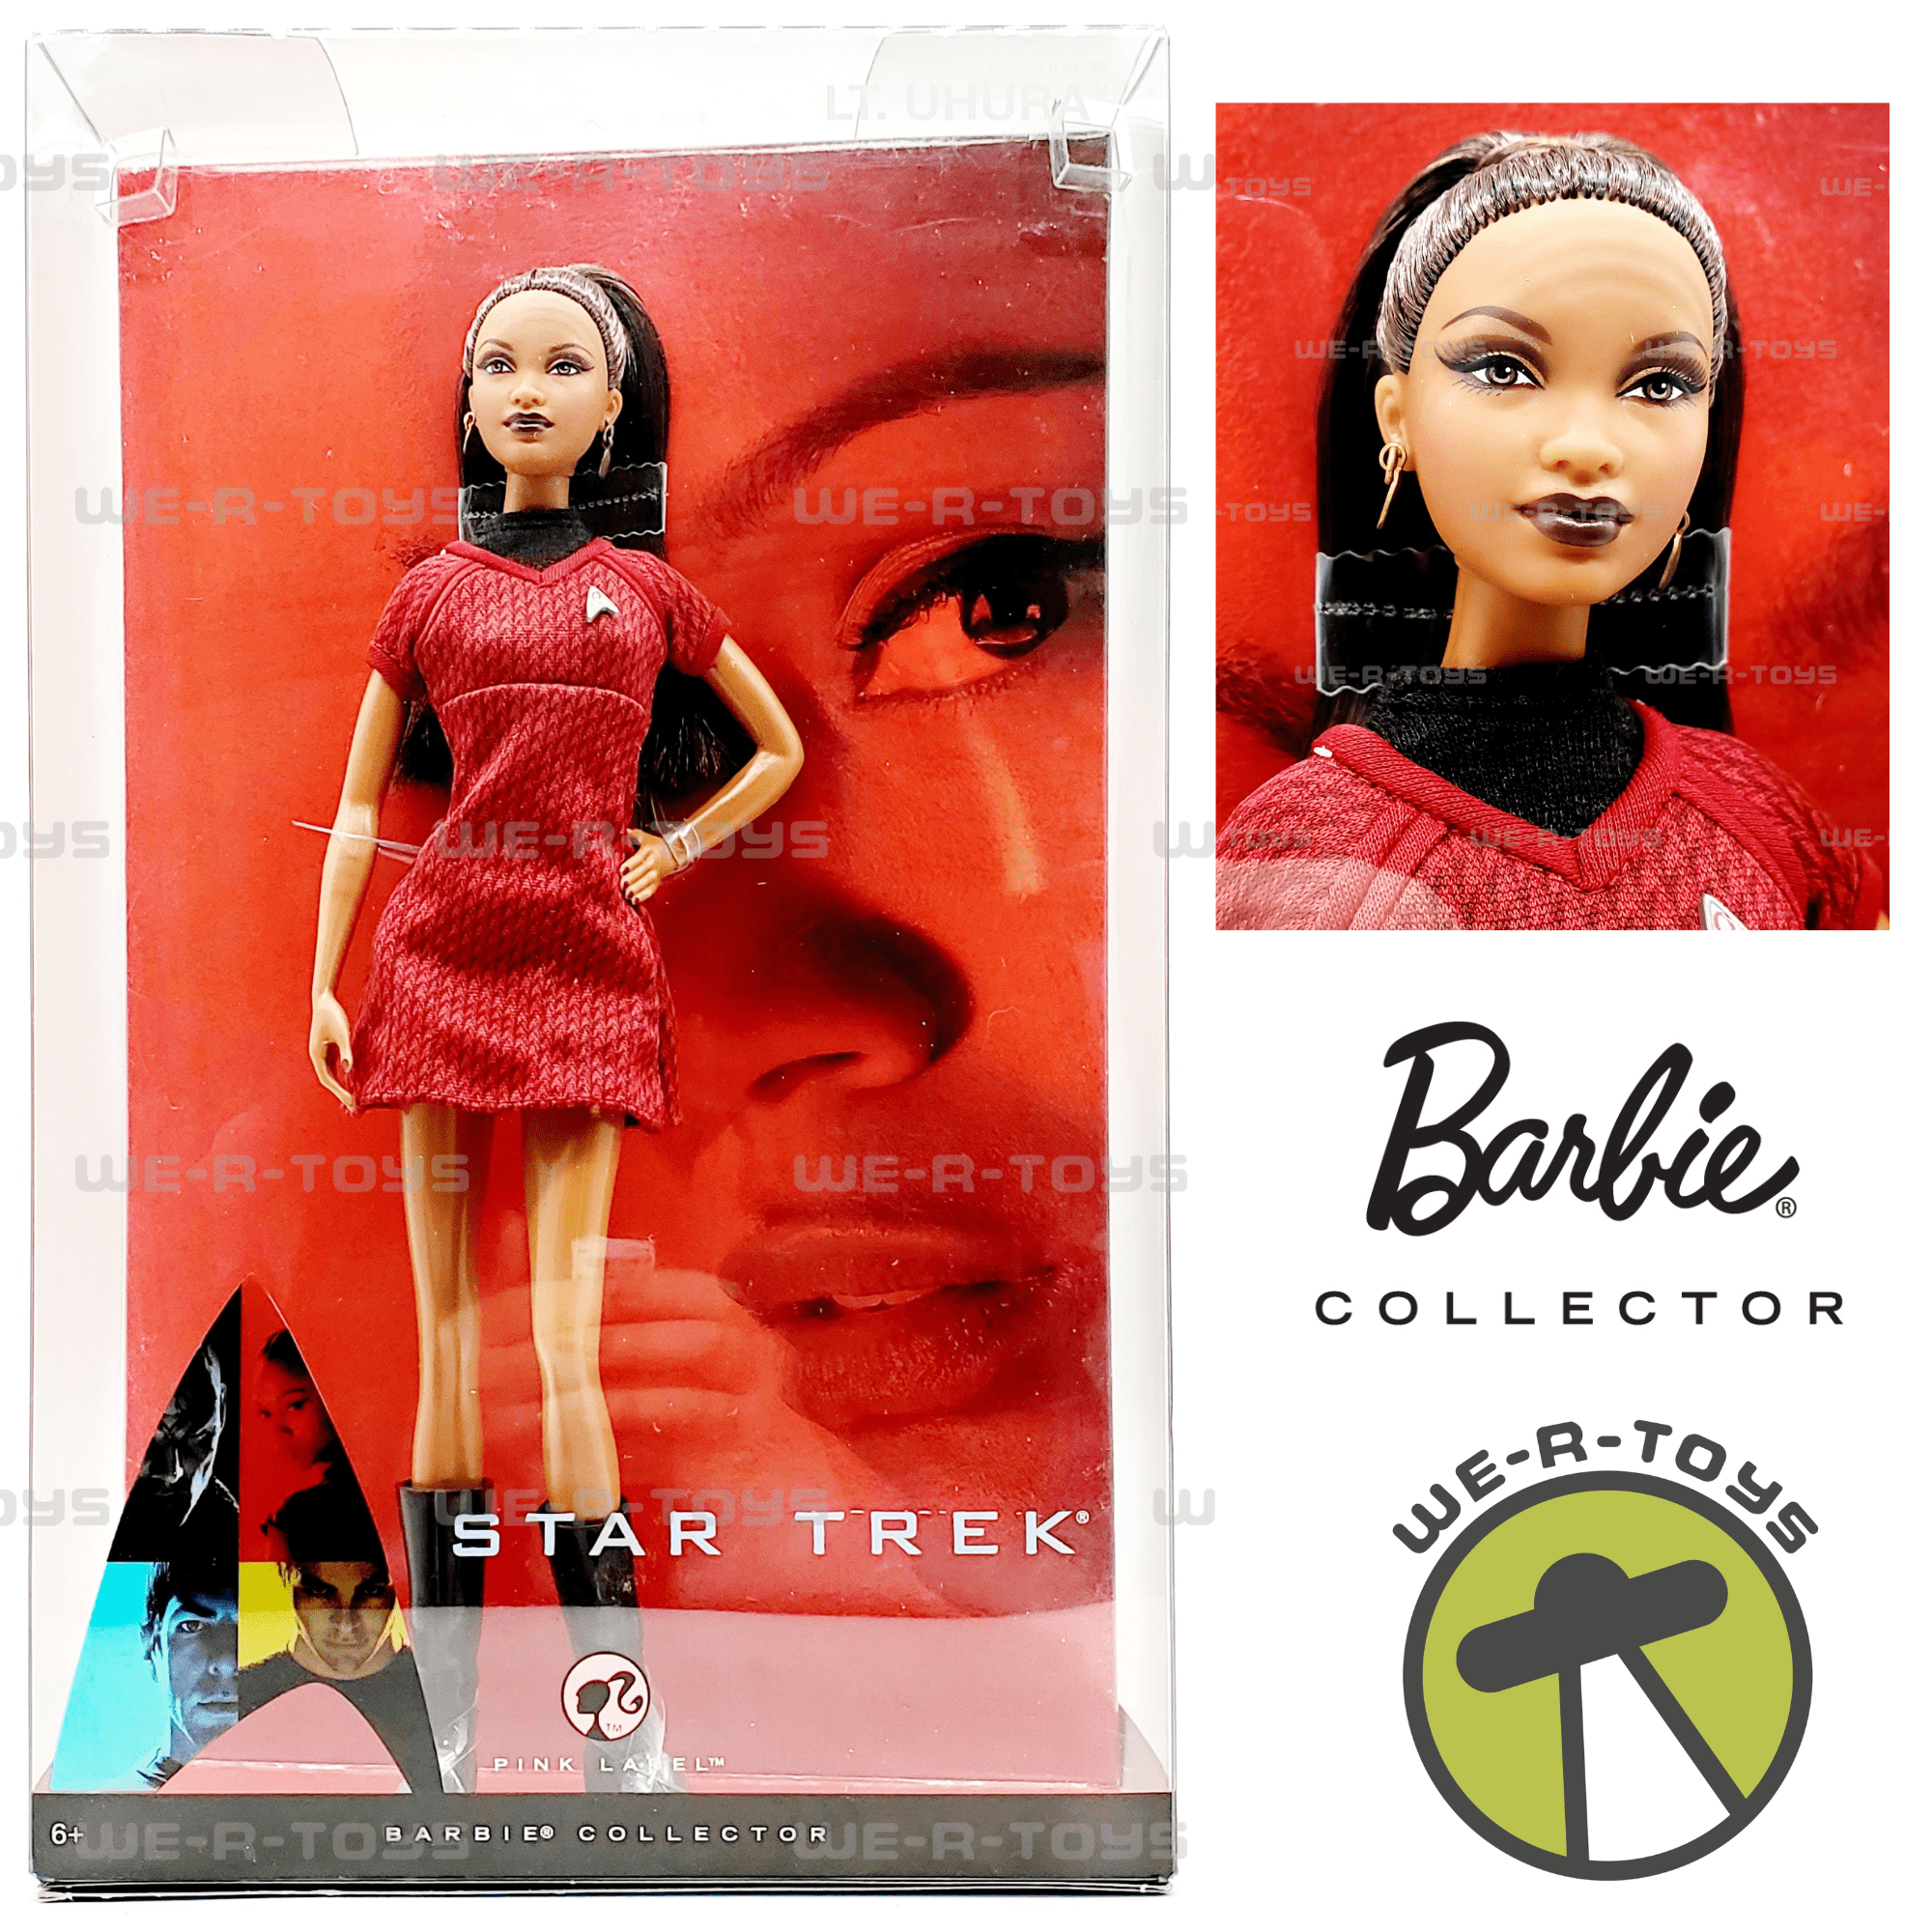 Barbie and Ken 30th Anniversary Star Trek - Barbie Doll as Lt. Uhura